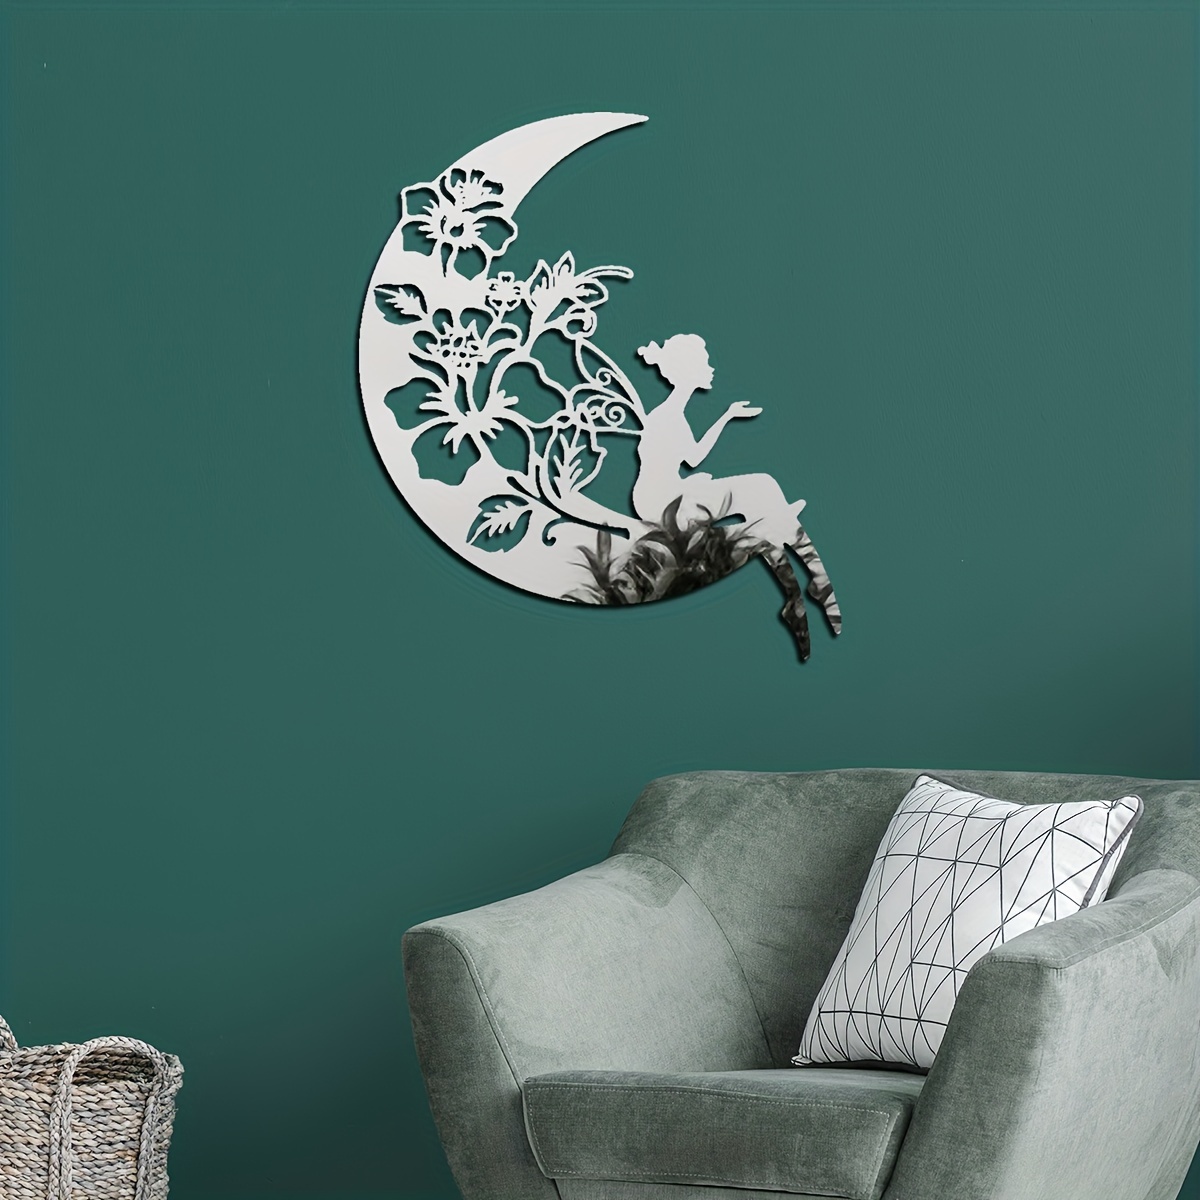 32pcs Moon & Star Shaped Mirror Wall Sticker Silvery Decorative Mirror  Sticker For Home Decor